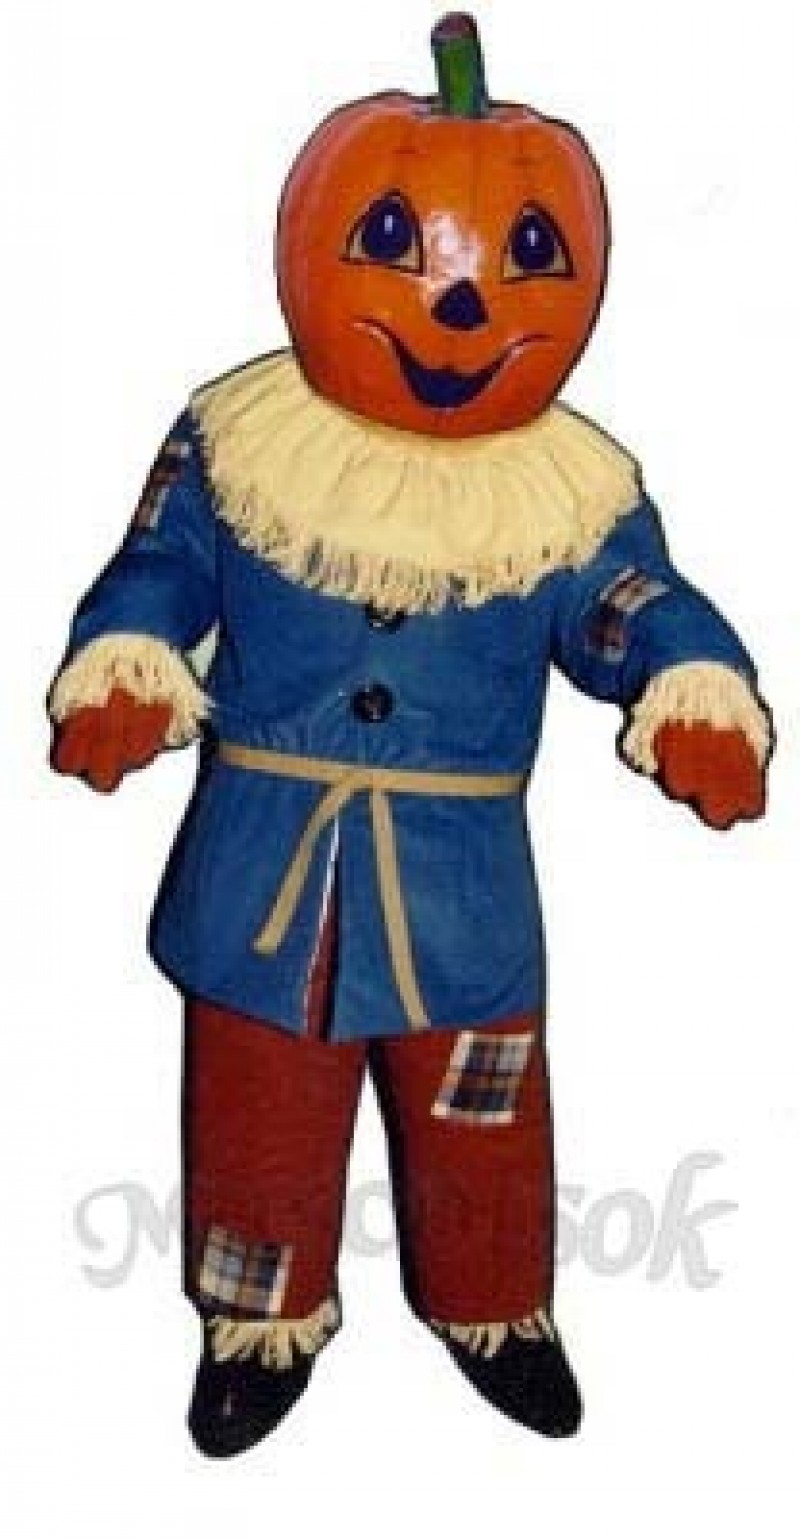 Pumpkin Mascot Costume